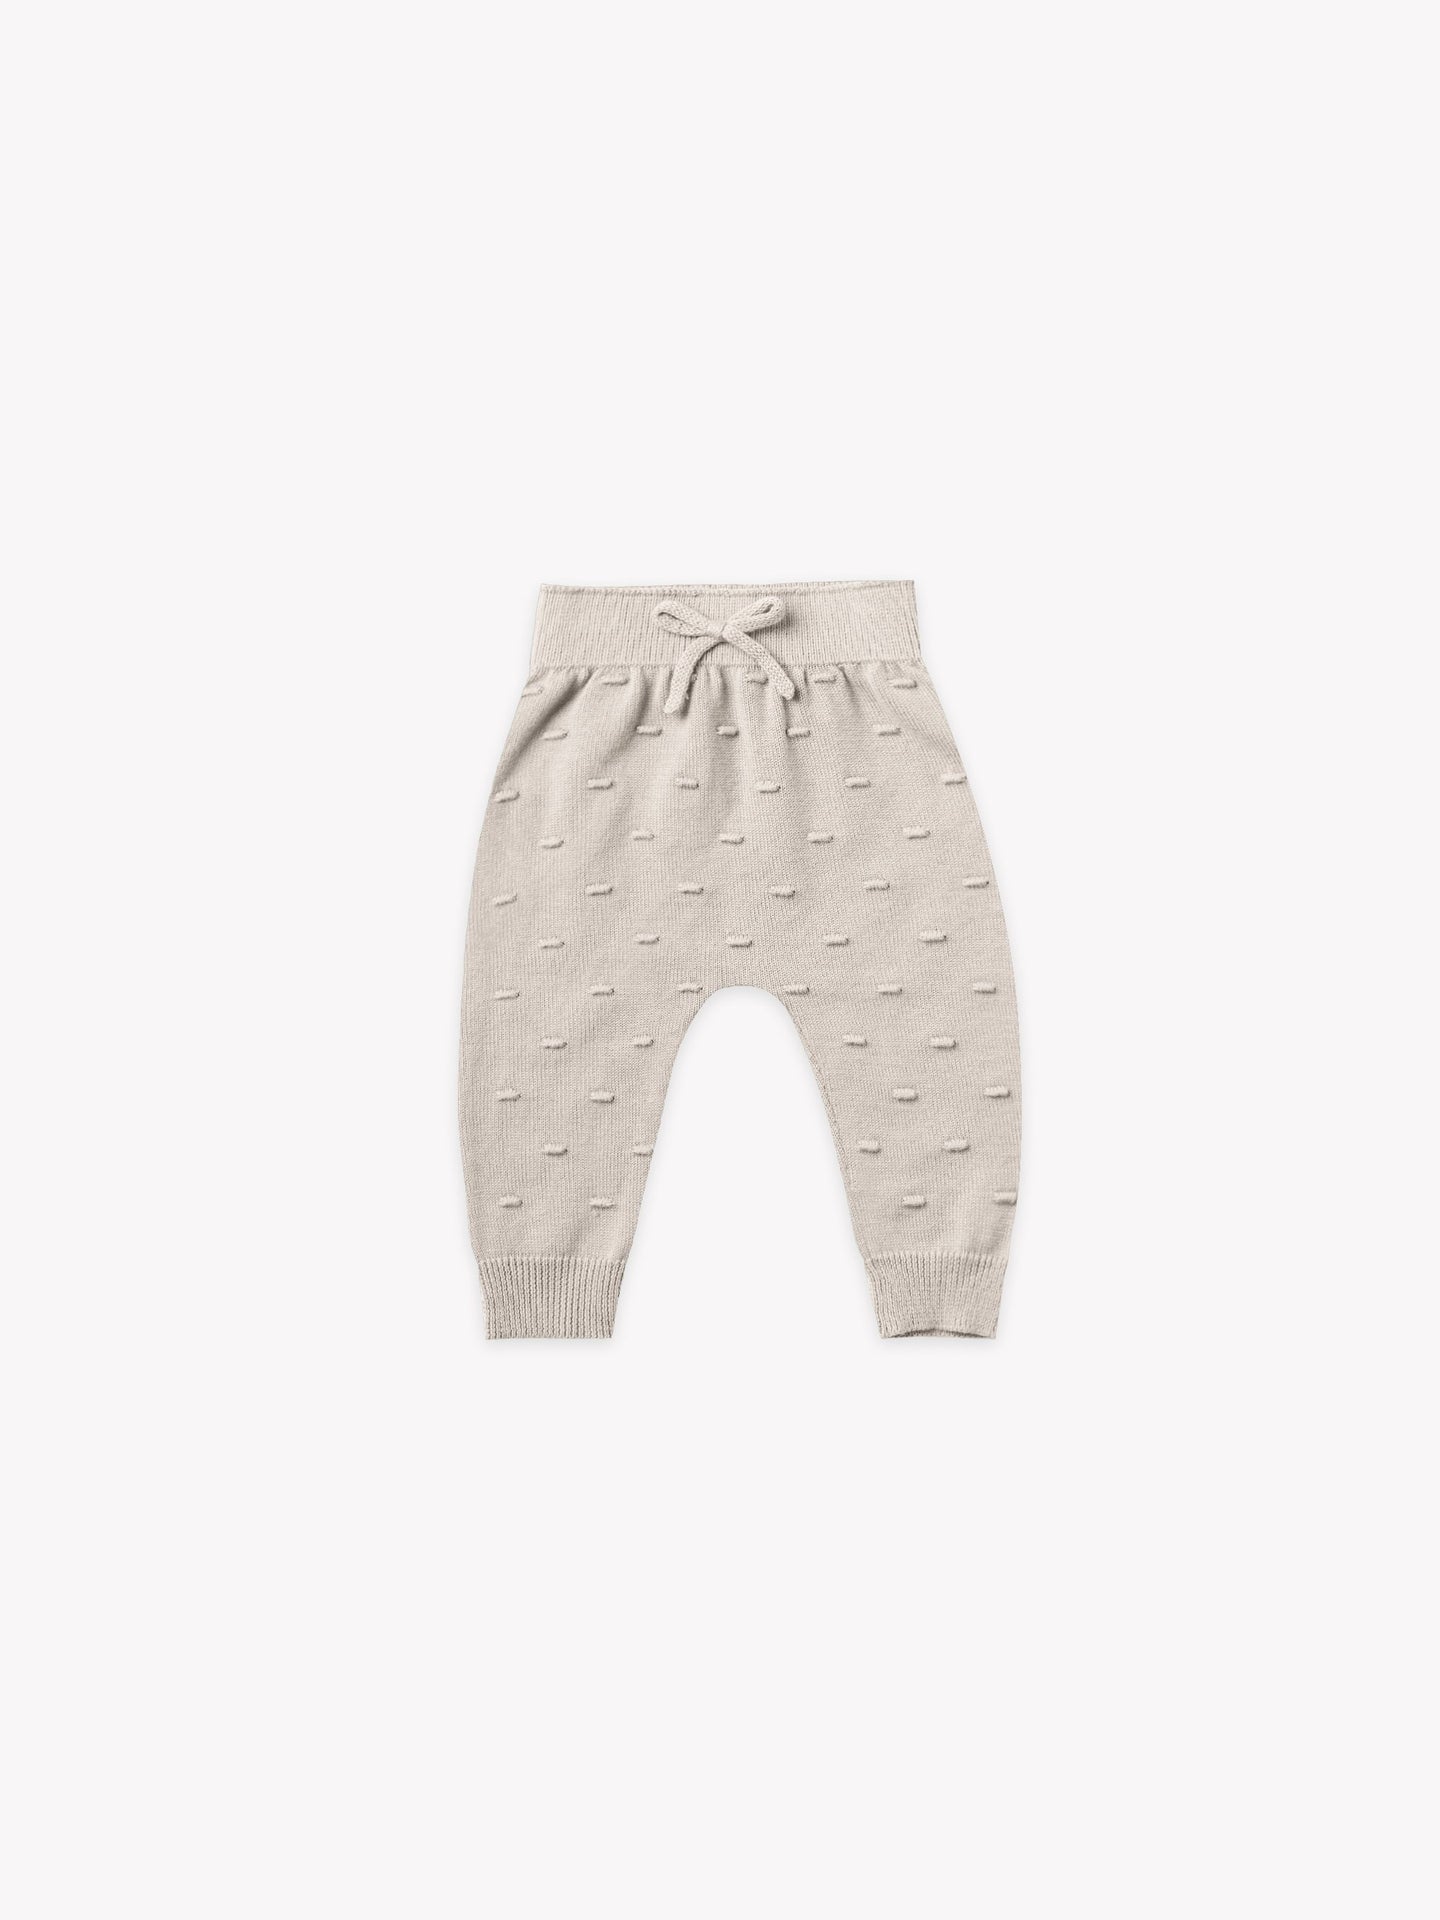 Quincy Mae - Organic Sweater Knit Pant - Fog